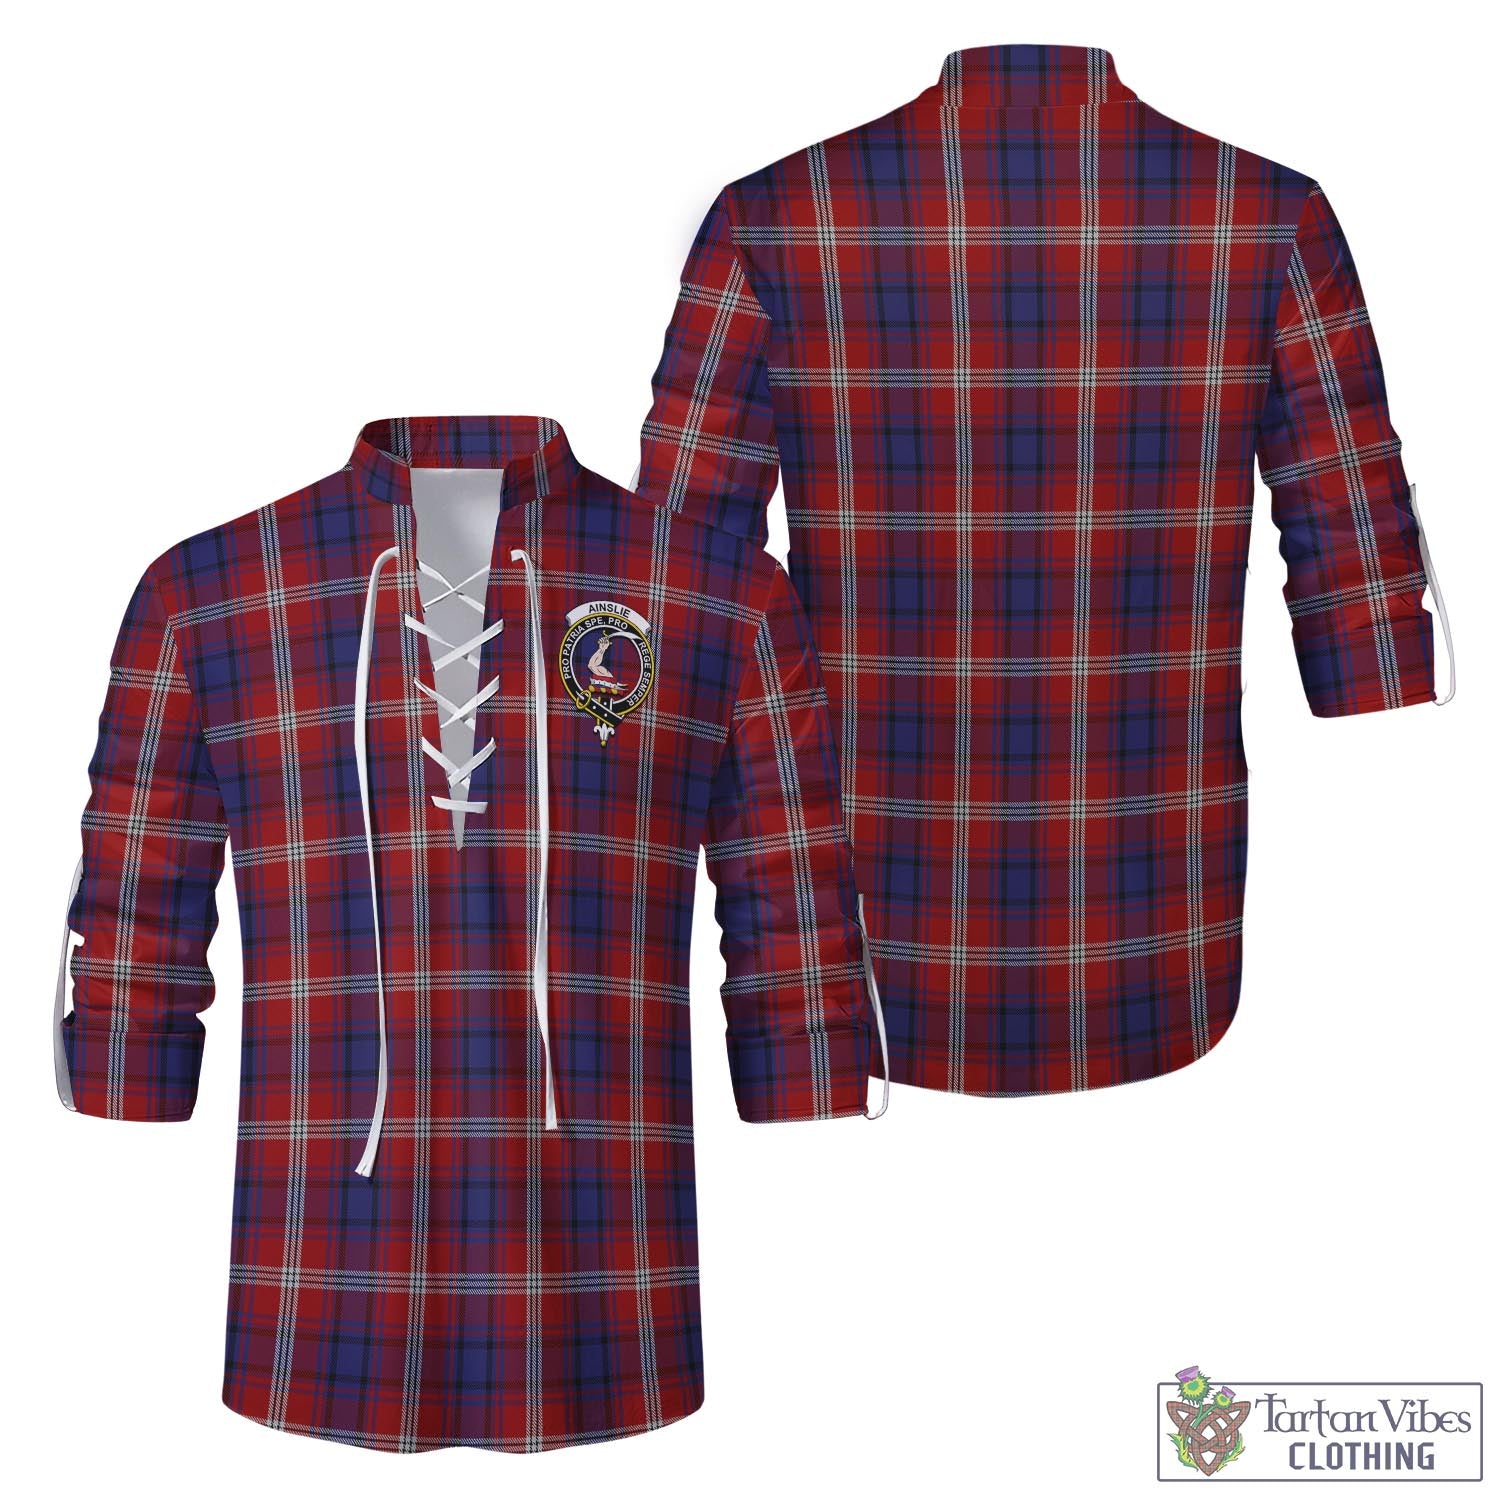 Tartan Vibes Clothing Ainslie Tartan Men's Scottish Traditional Jacobite Ghillie Kilt Shirt with Family Crest